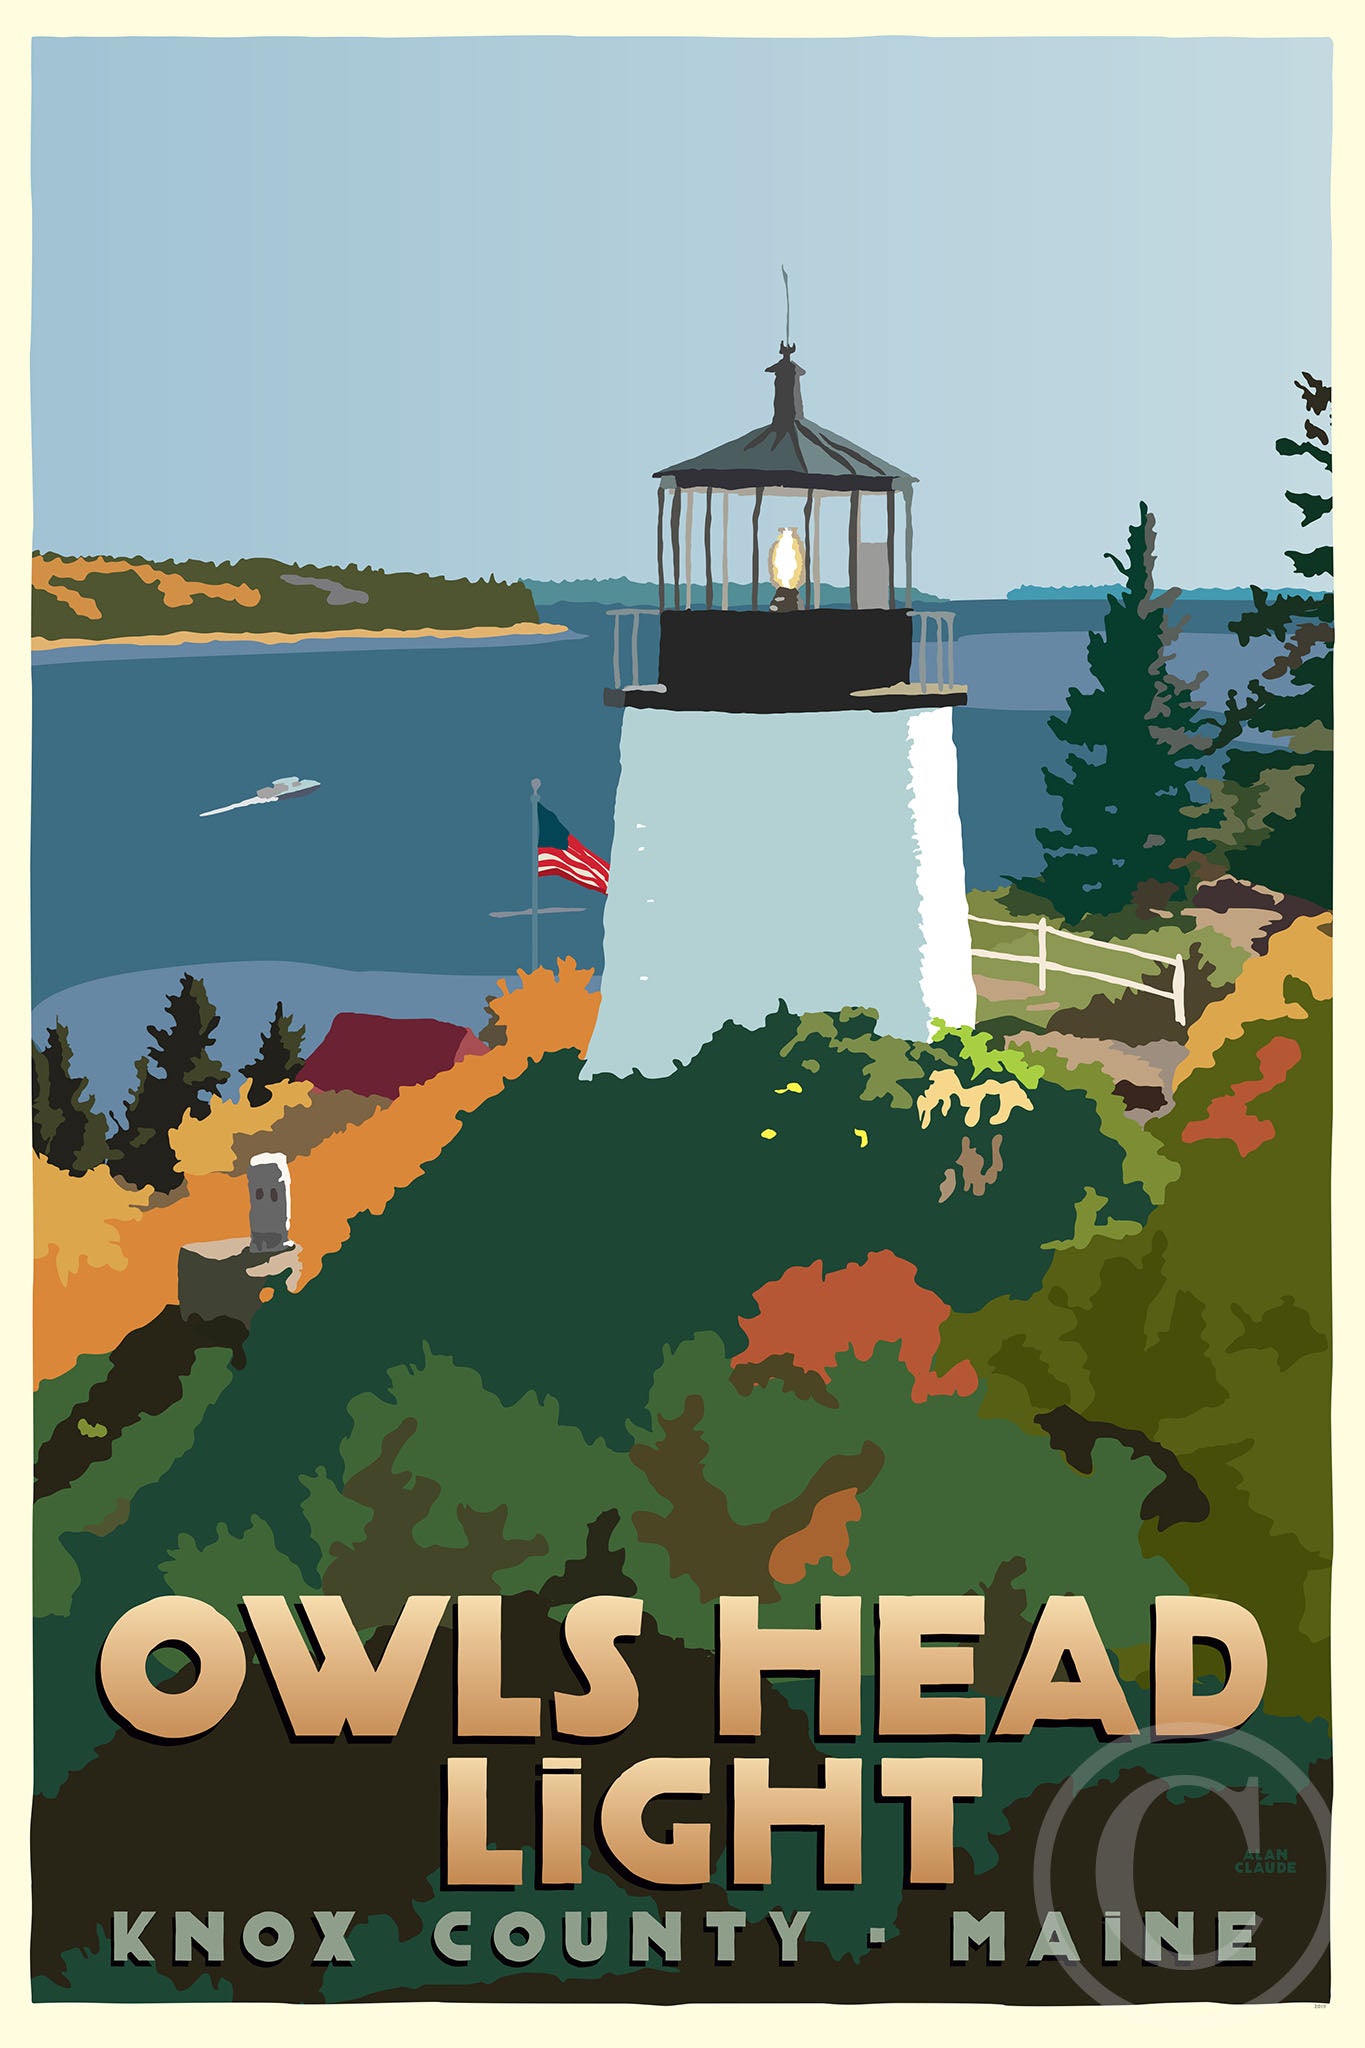 Above Owls Head Light Art Print 36" x 53" Travel Poster By Alan Claude - Maine